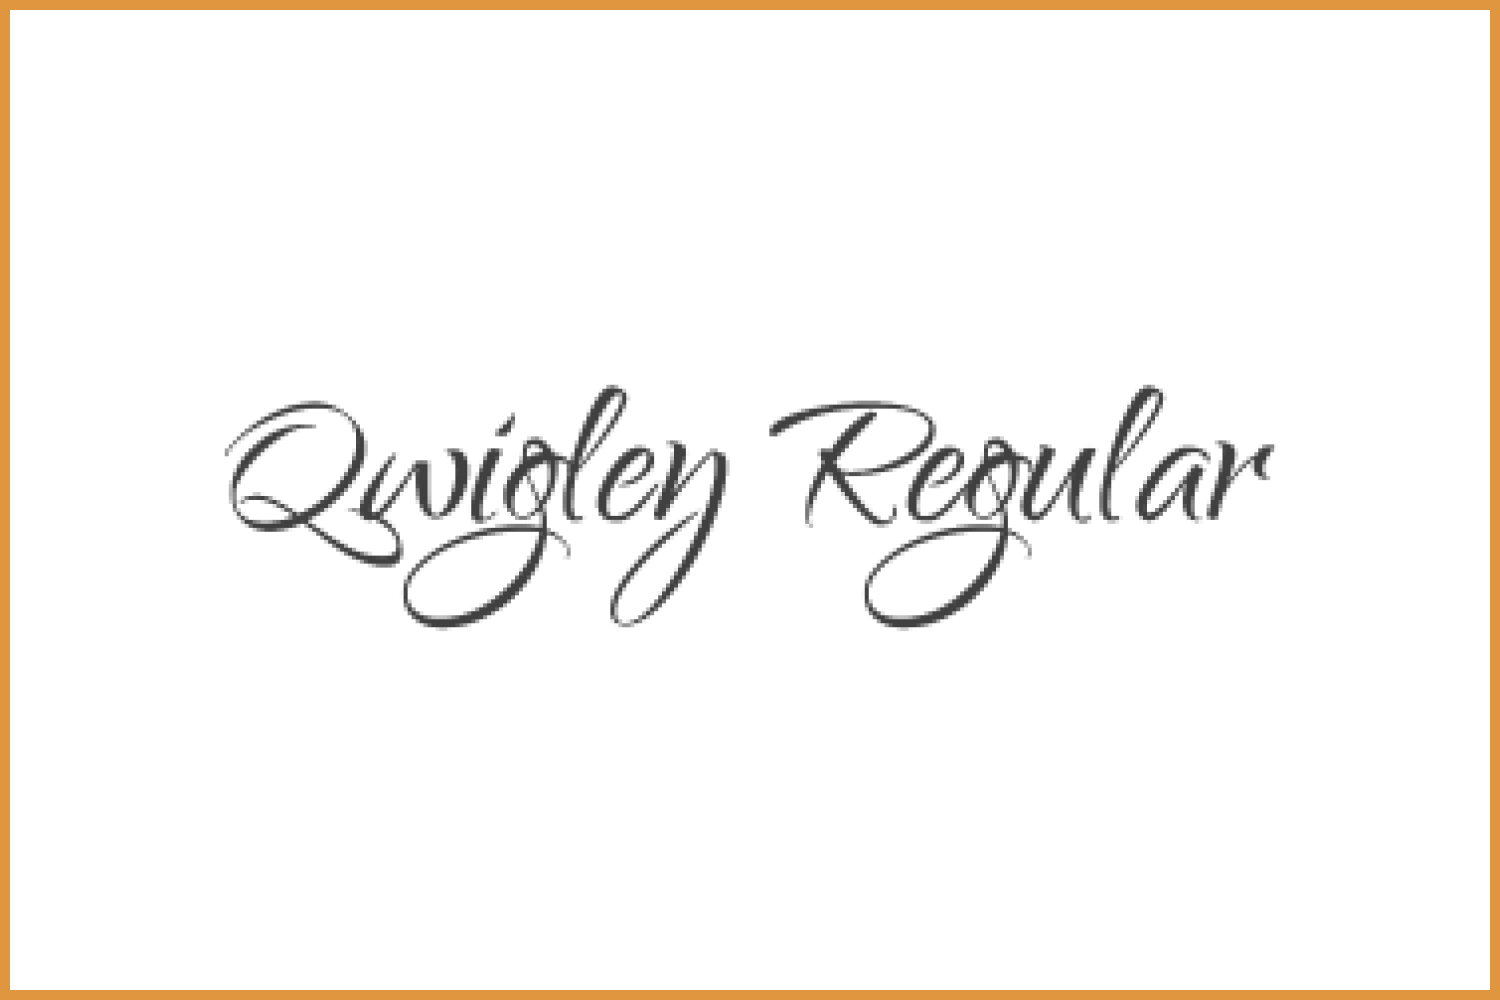 Black text Qwigley Regular on white background.